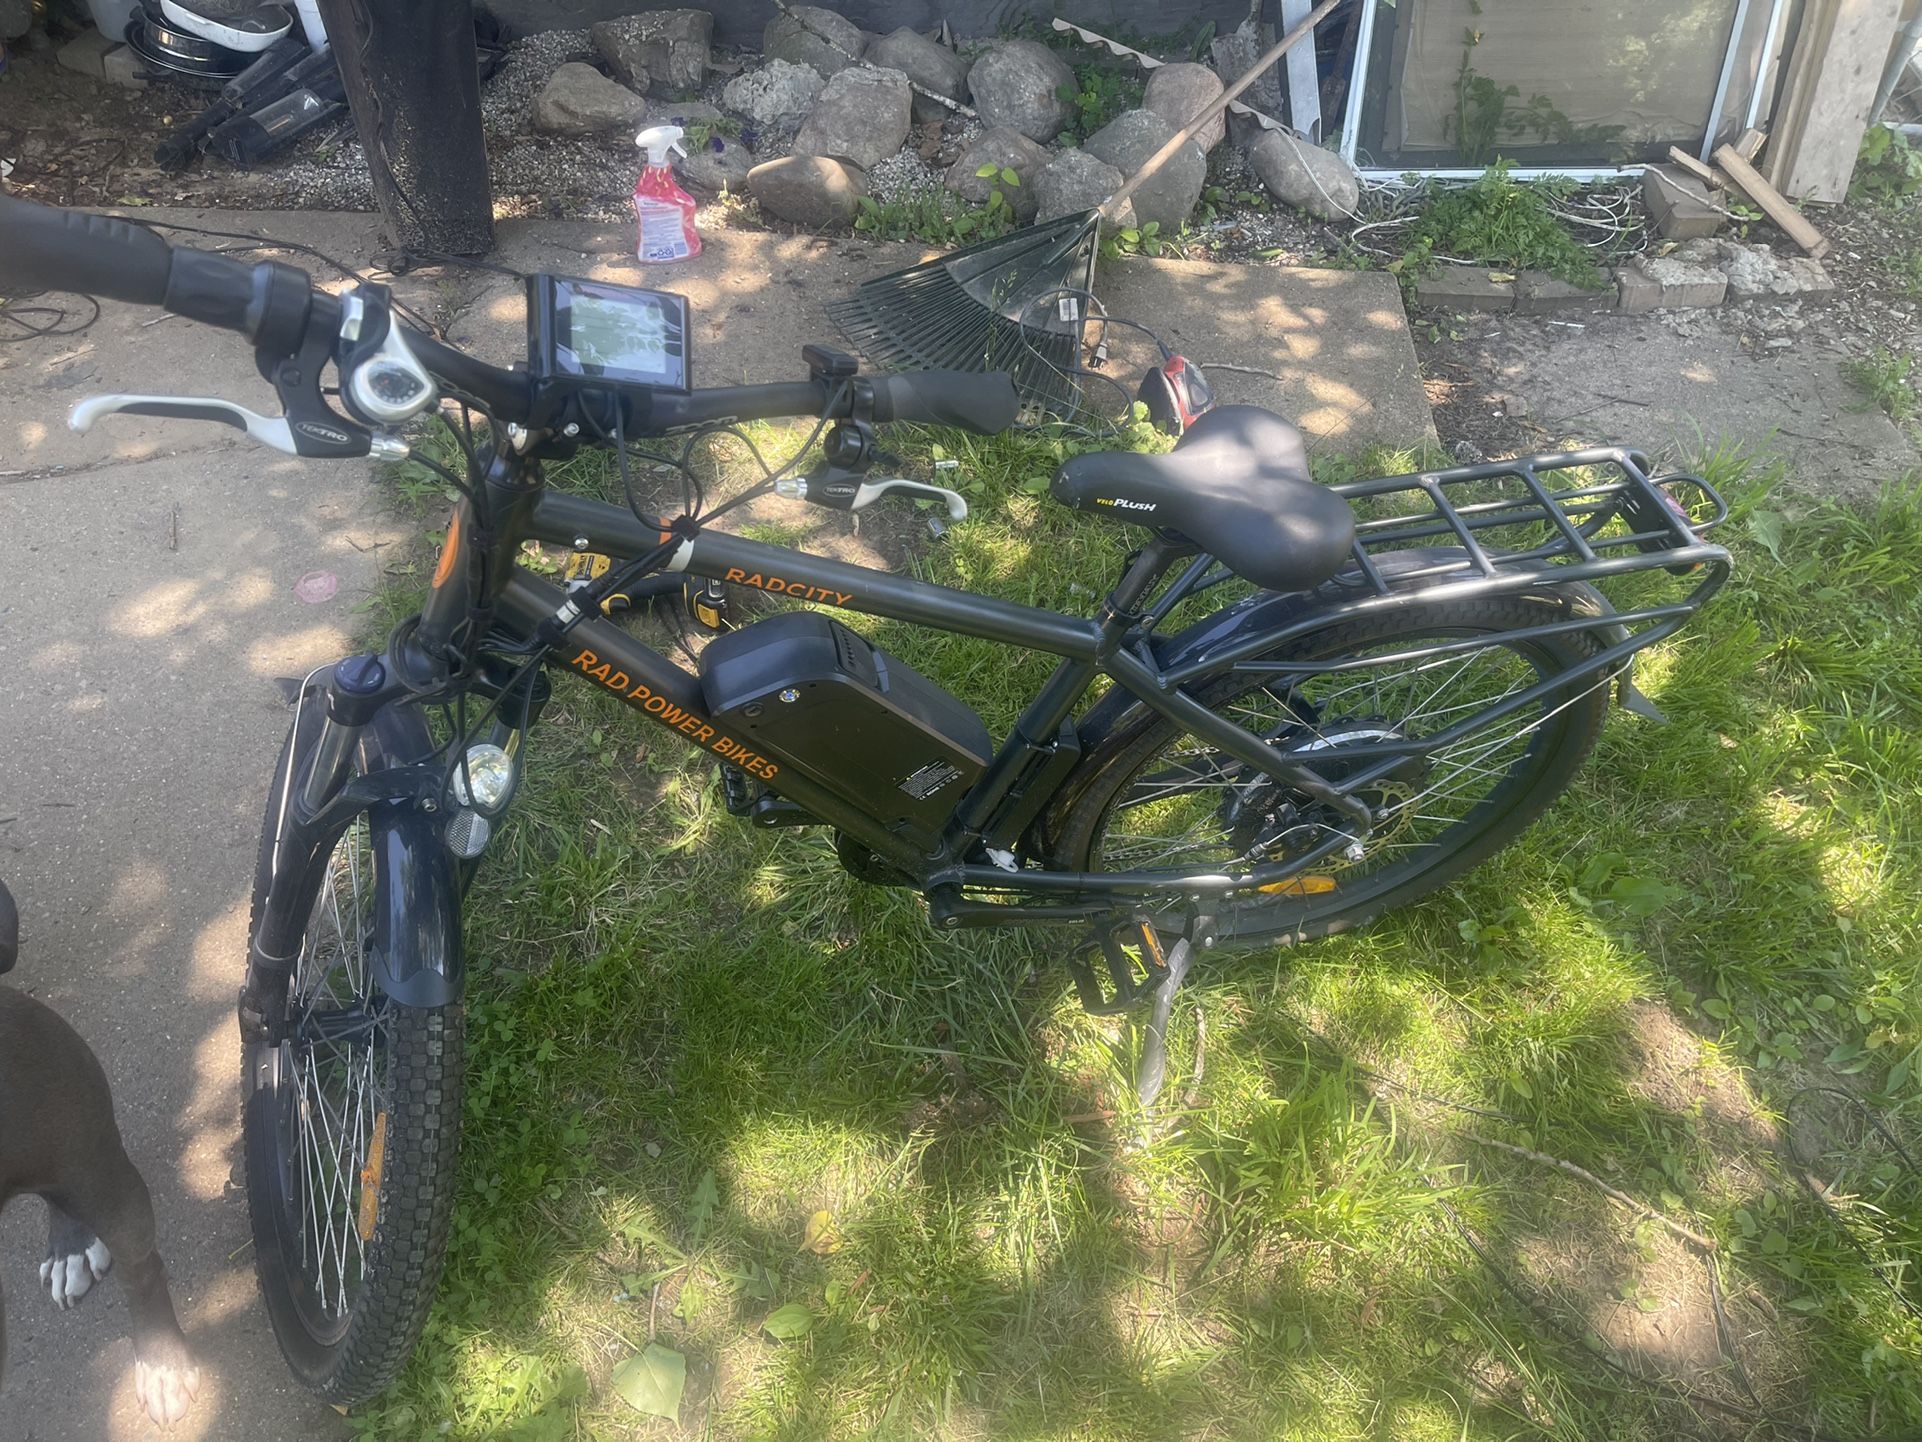 E Bike ( Electric Bicycle ) RADCITY Power Bike $900